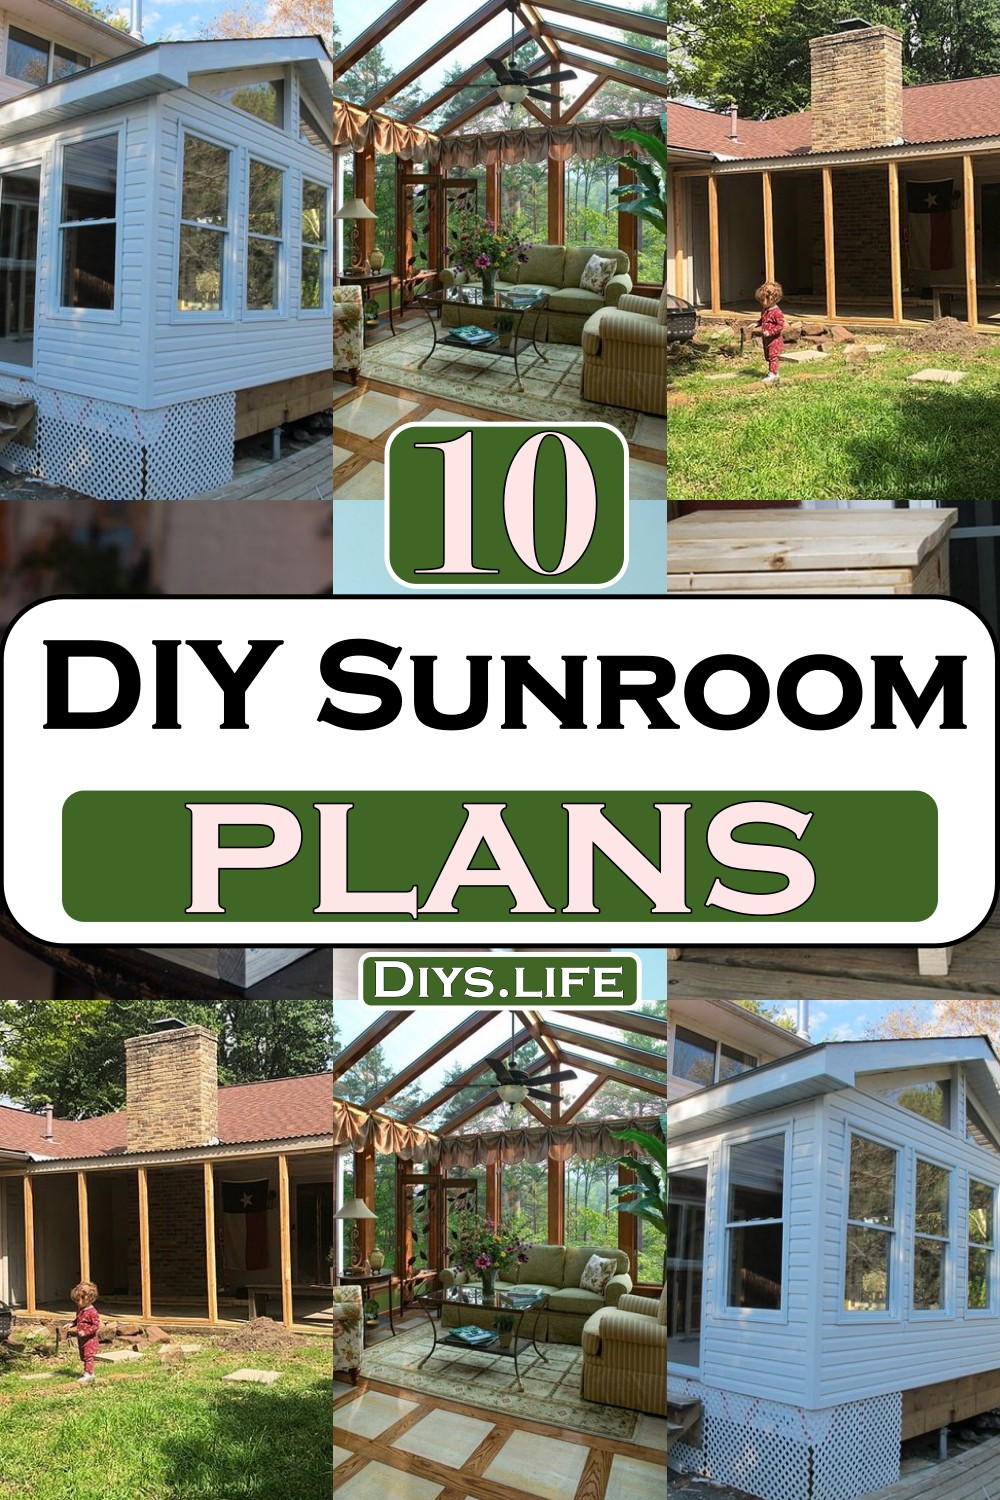 DIY Sunroom Plans